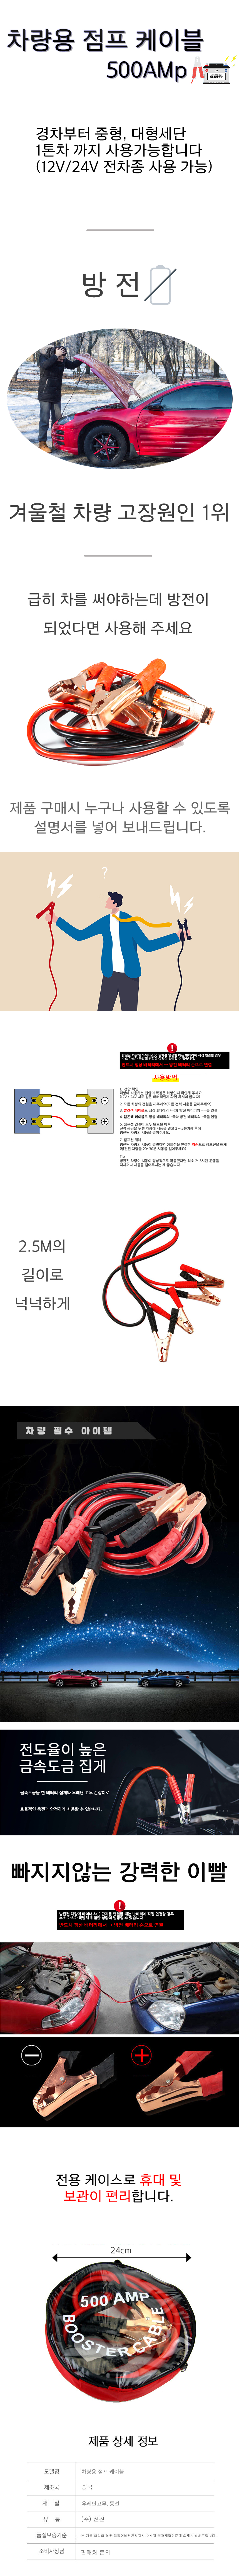 car Battery Jumper Cable.jpg